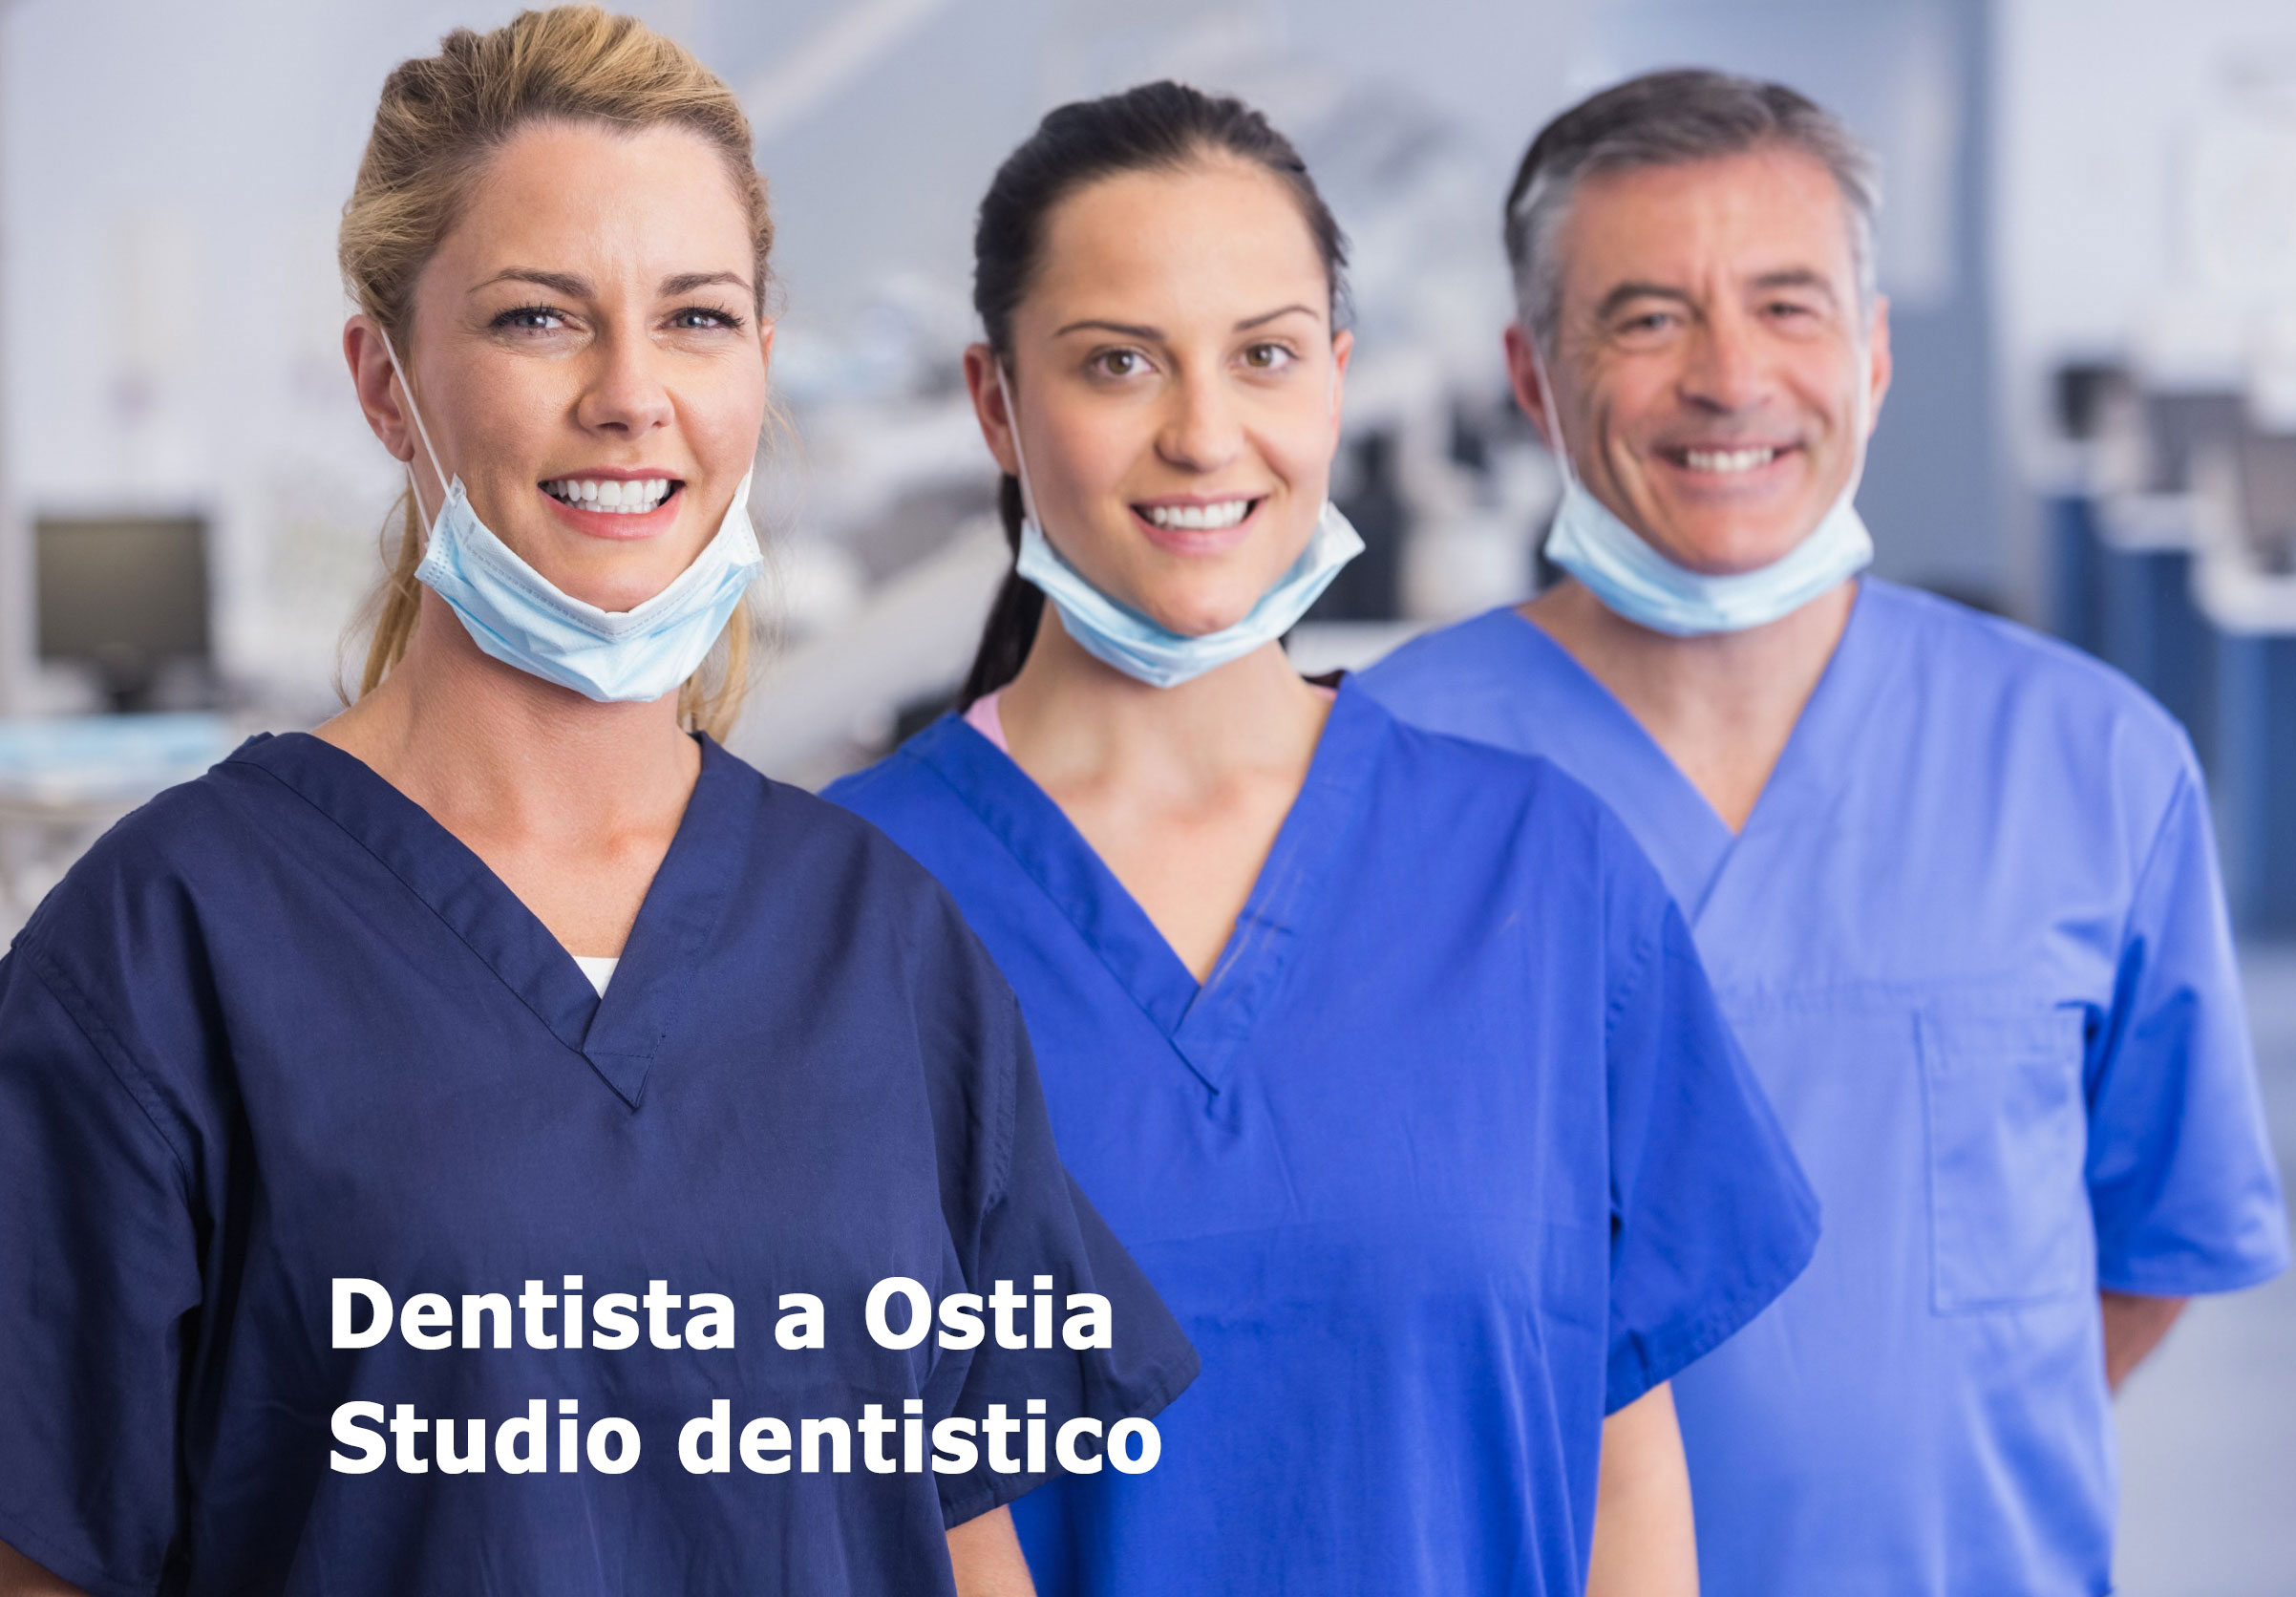 Dentista-Ostia-1